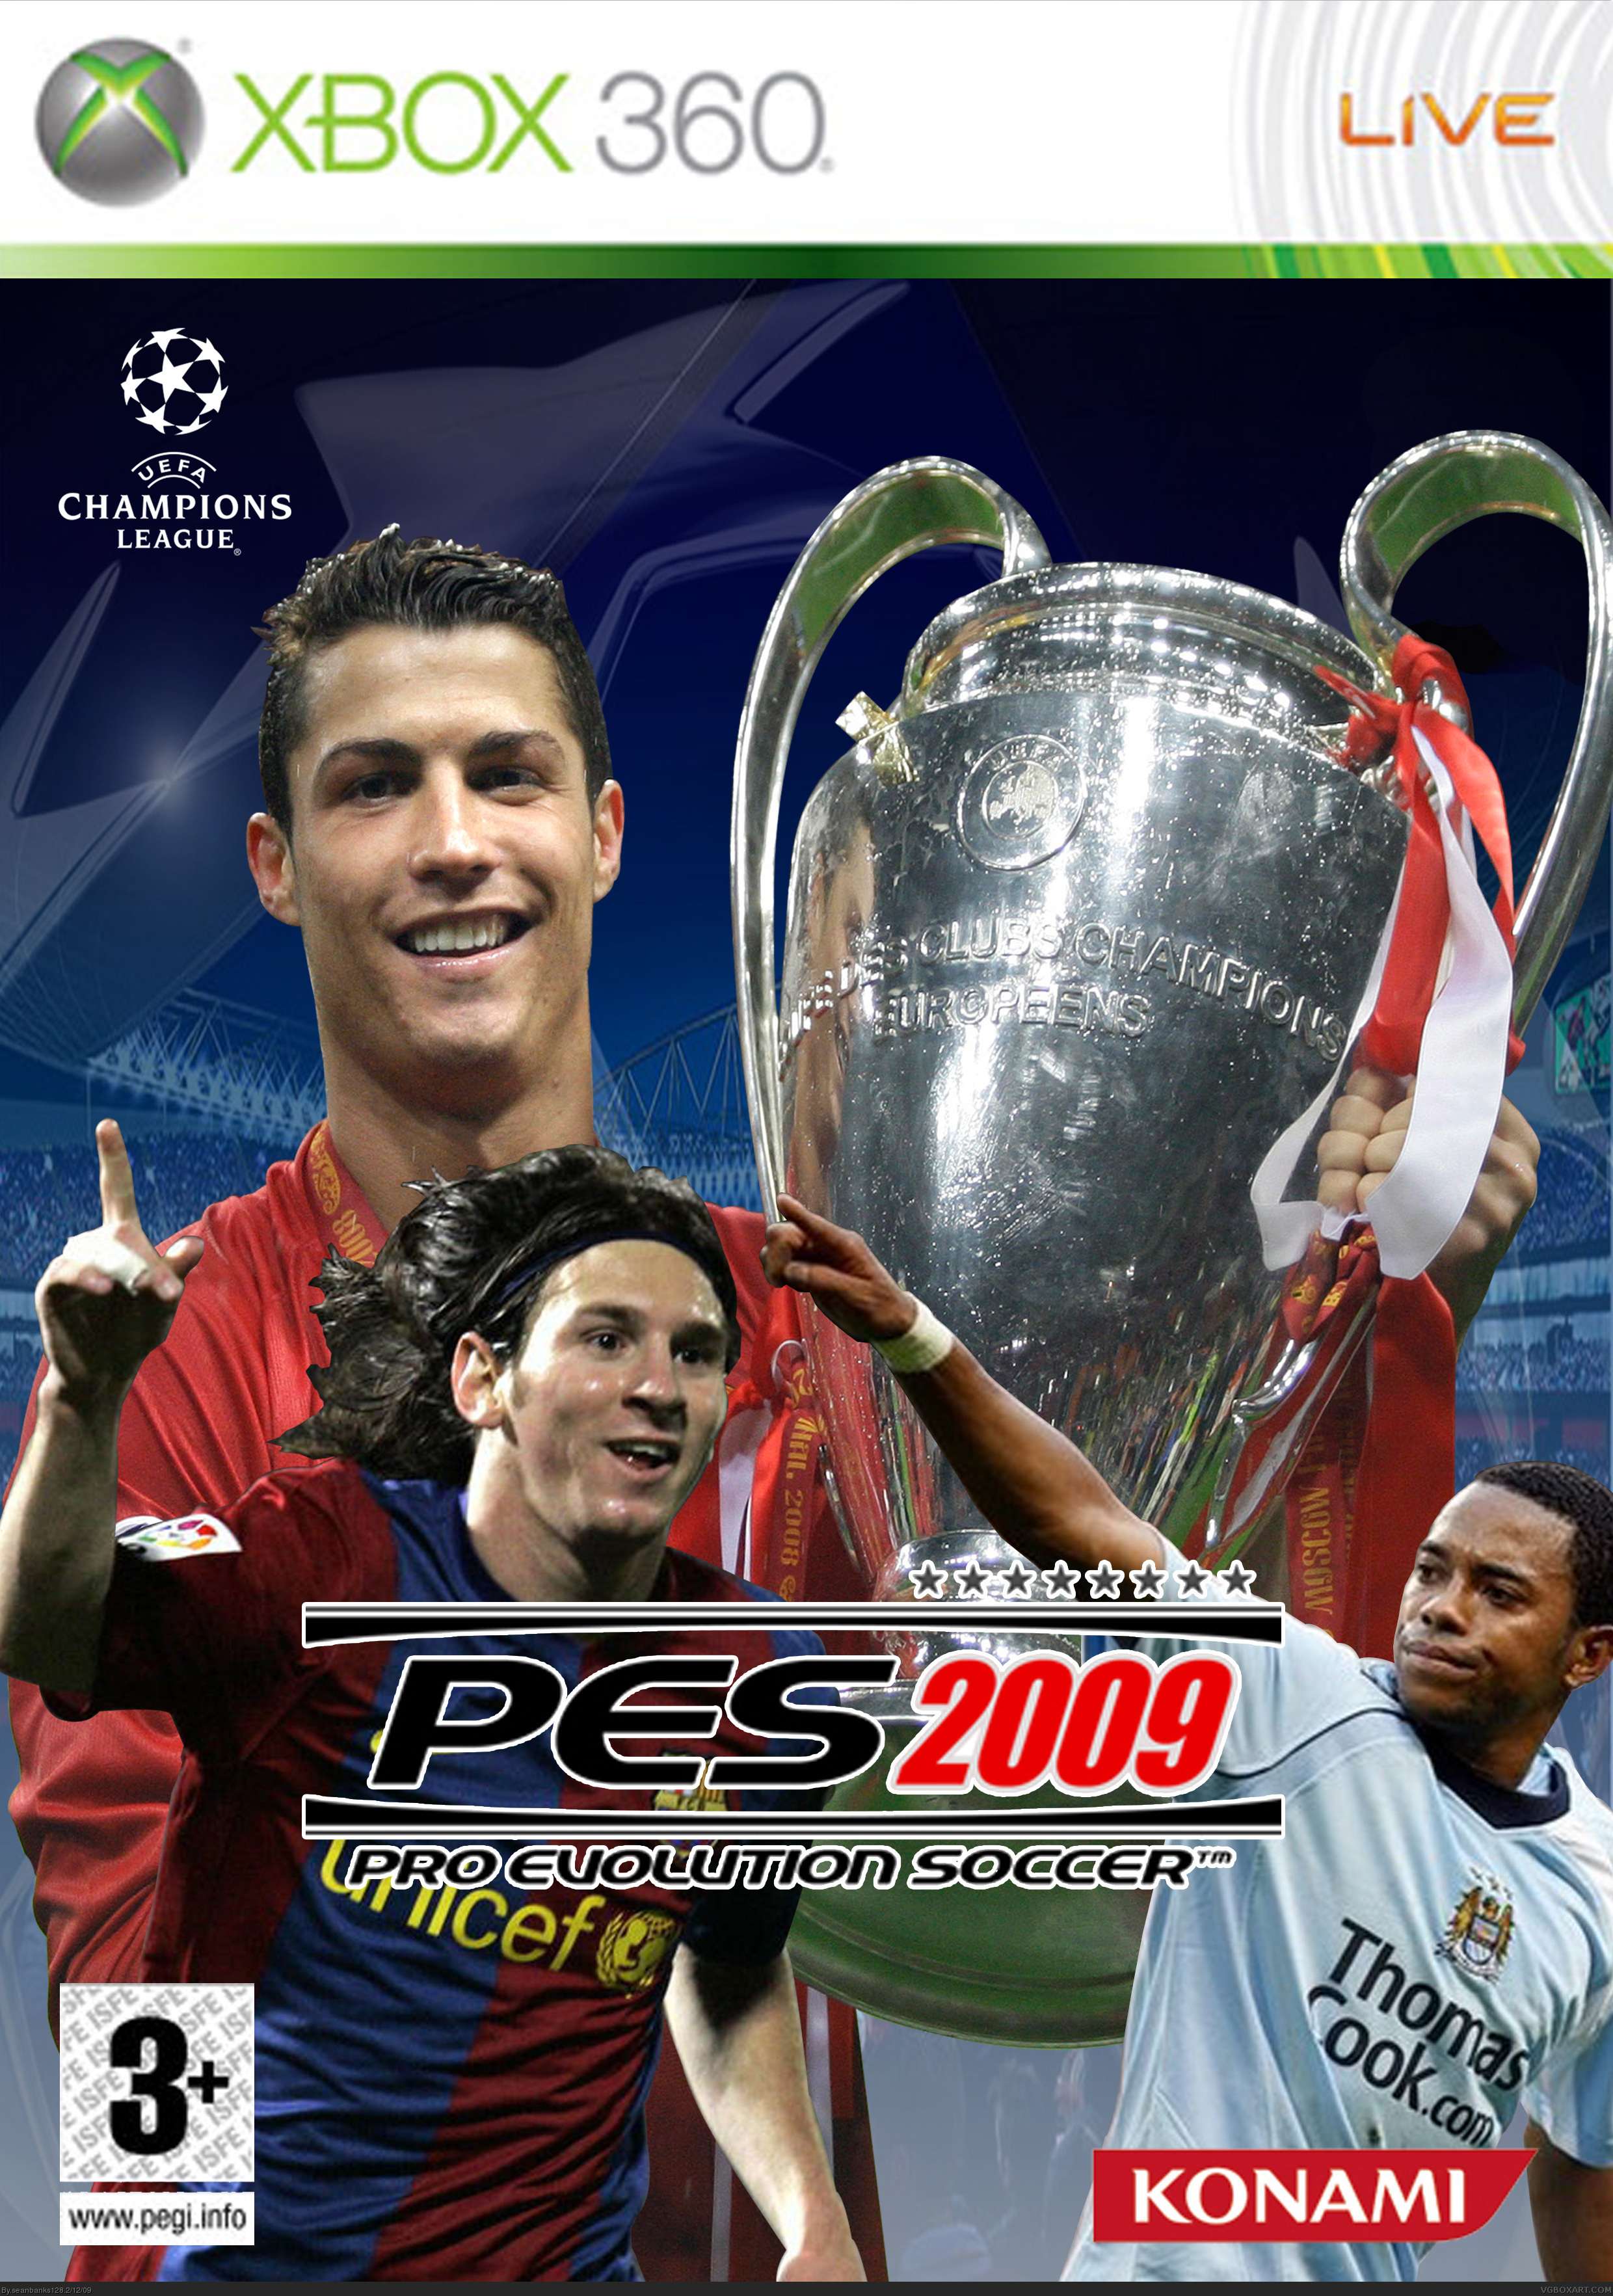 Pro evolution soccer 2009 box cover